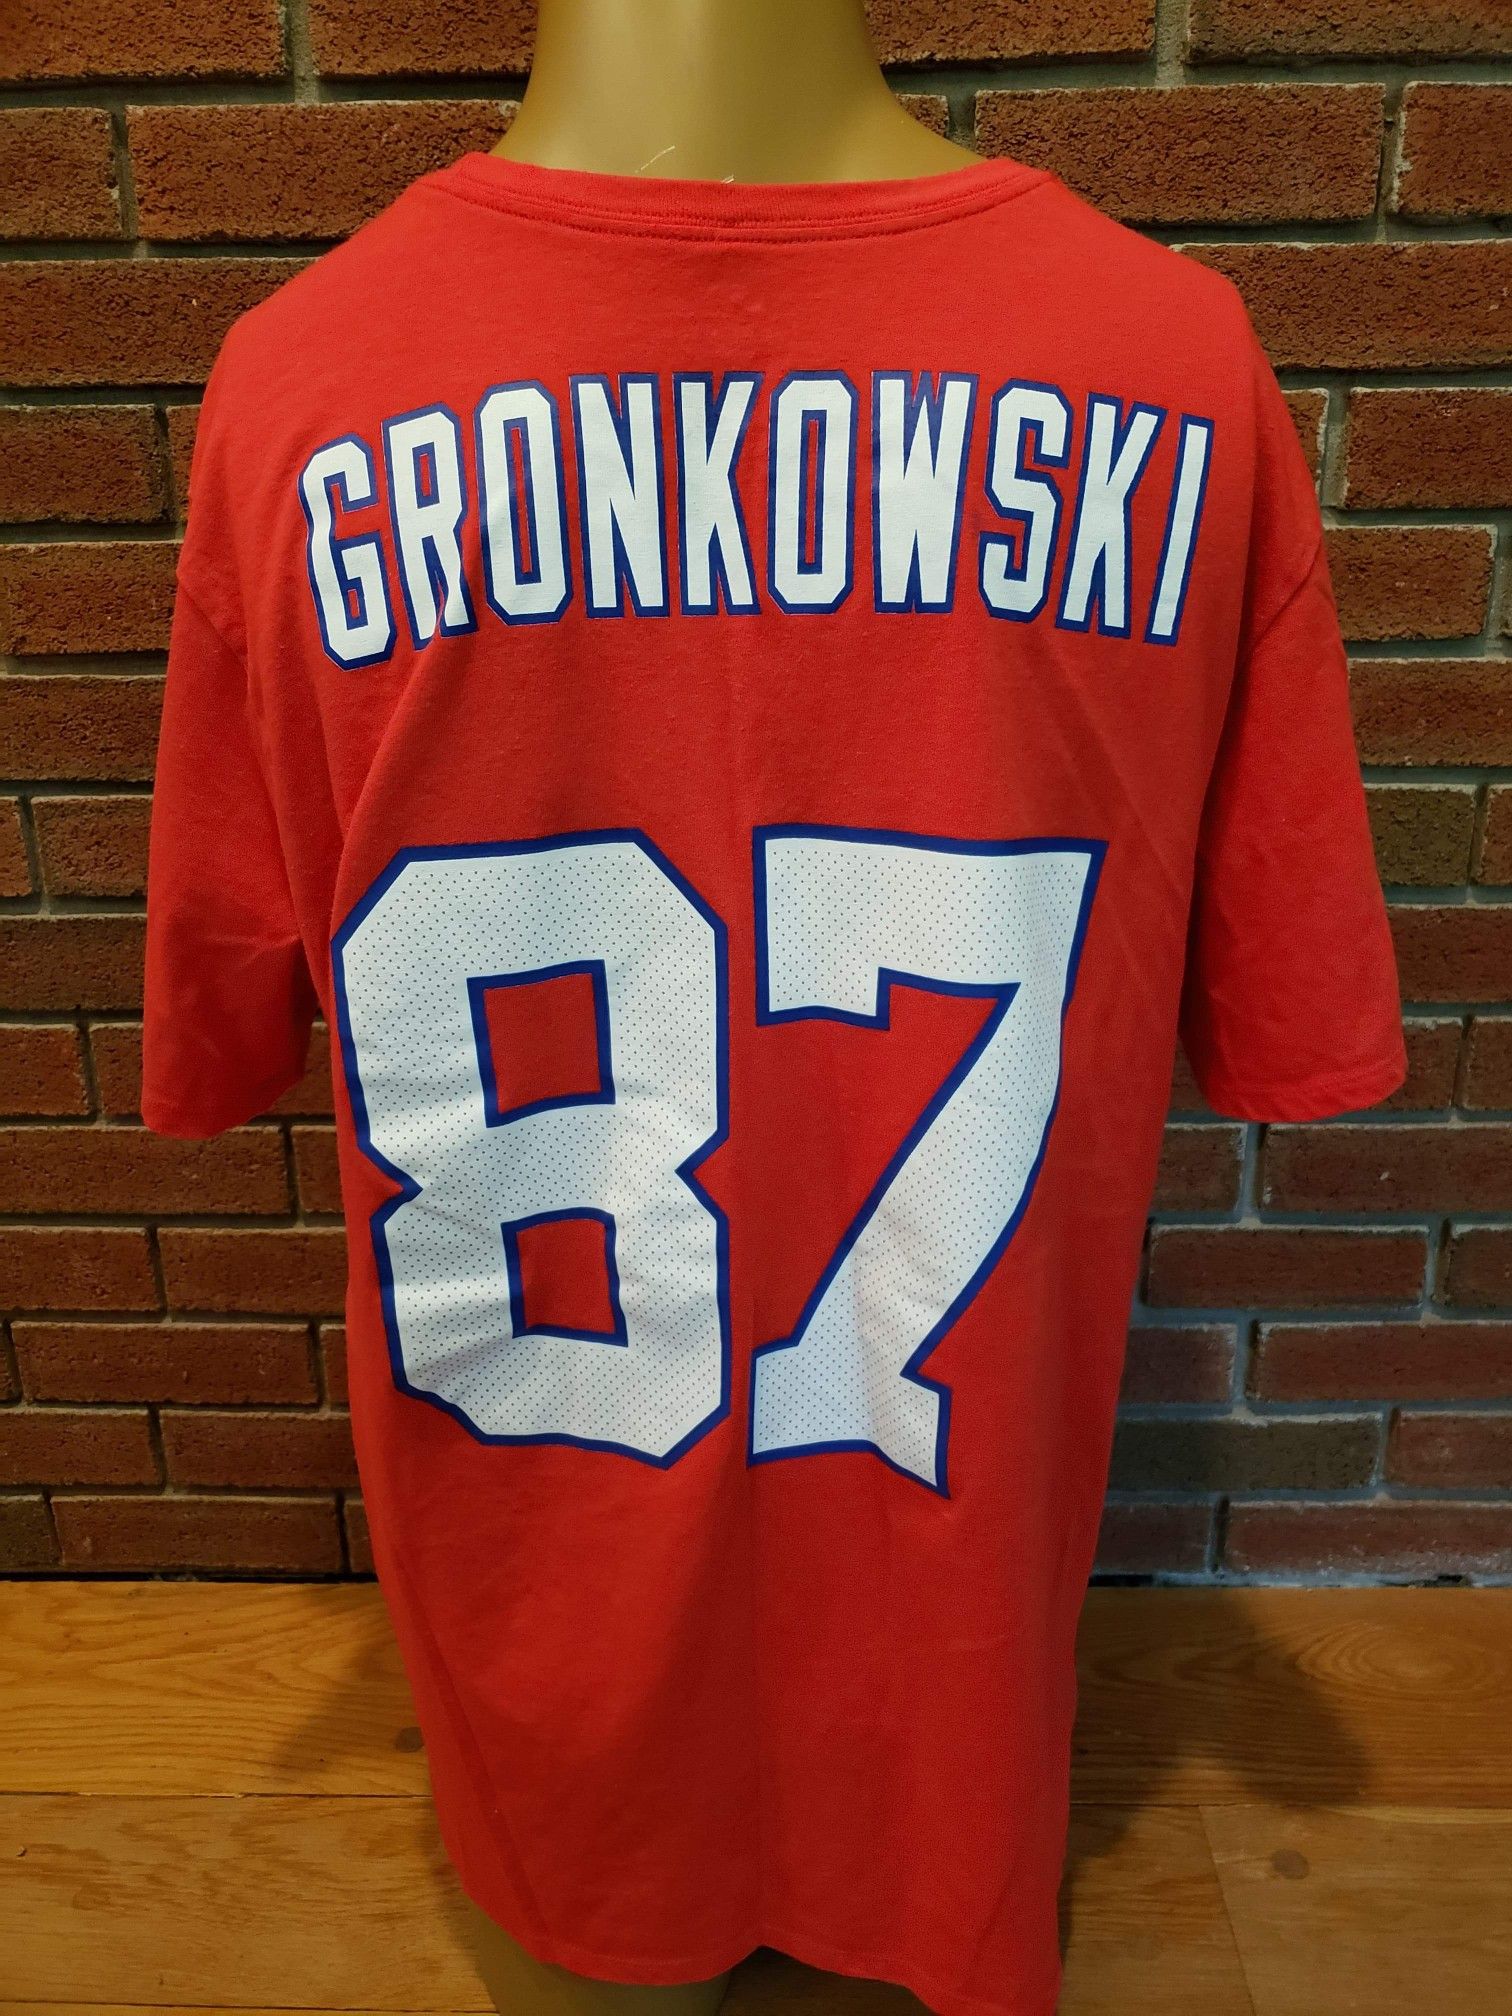 Gronkowski XXL Patriots Shirt in Excellent Condition!